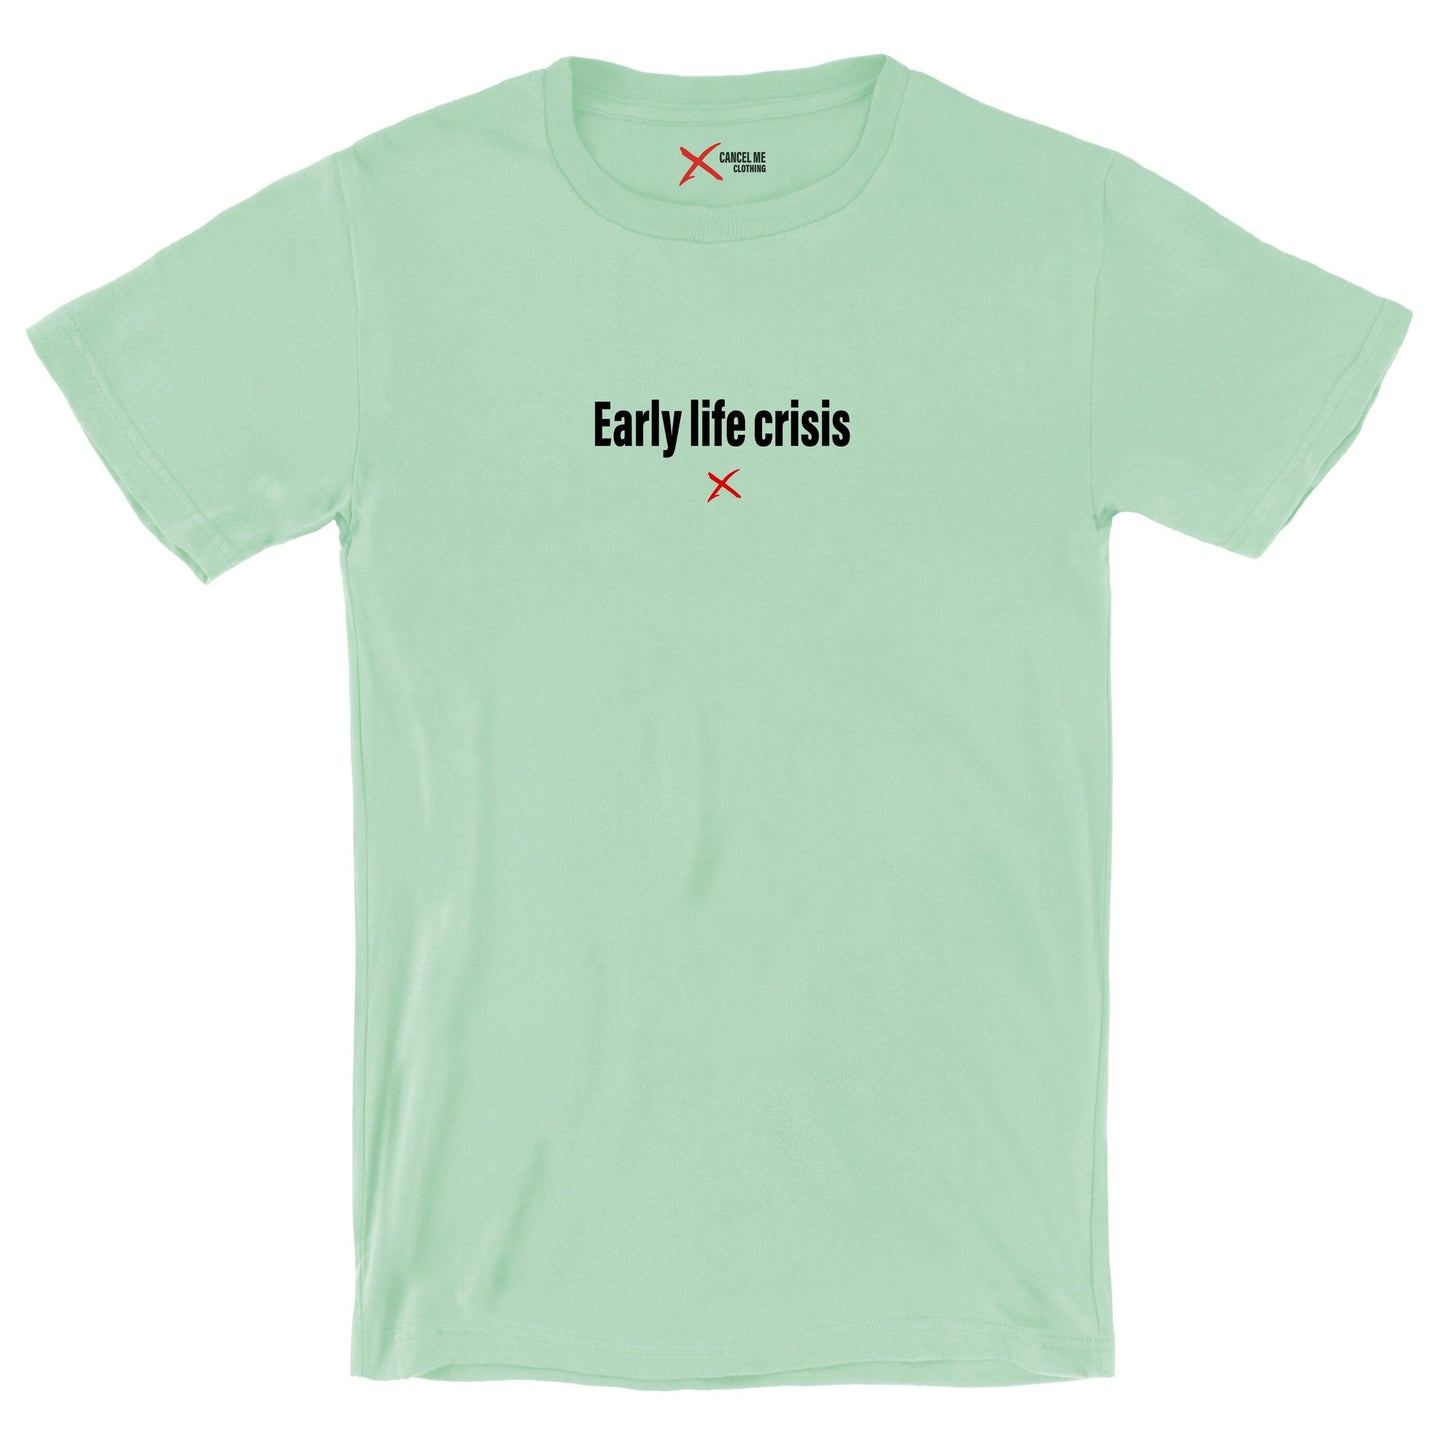 Early life crisis - Shirt